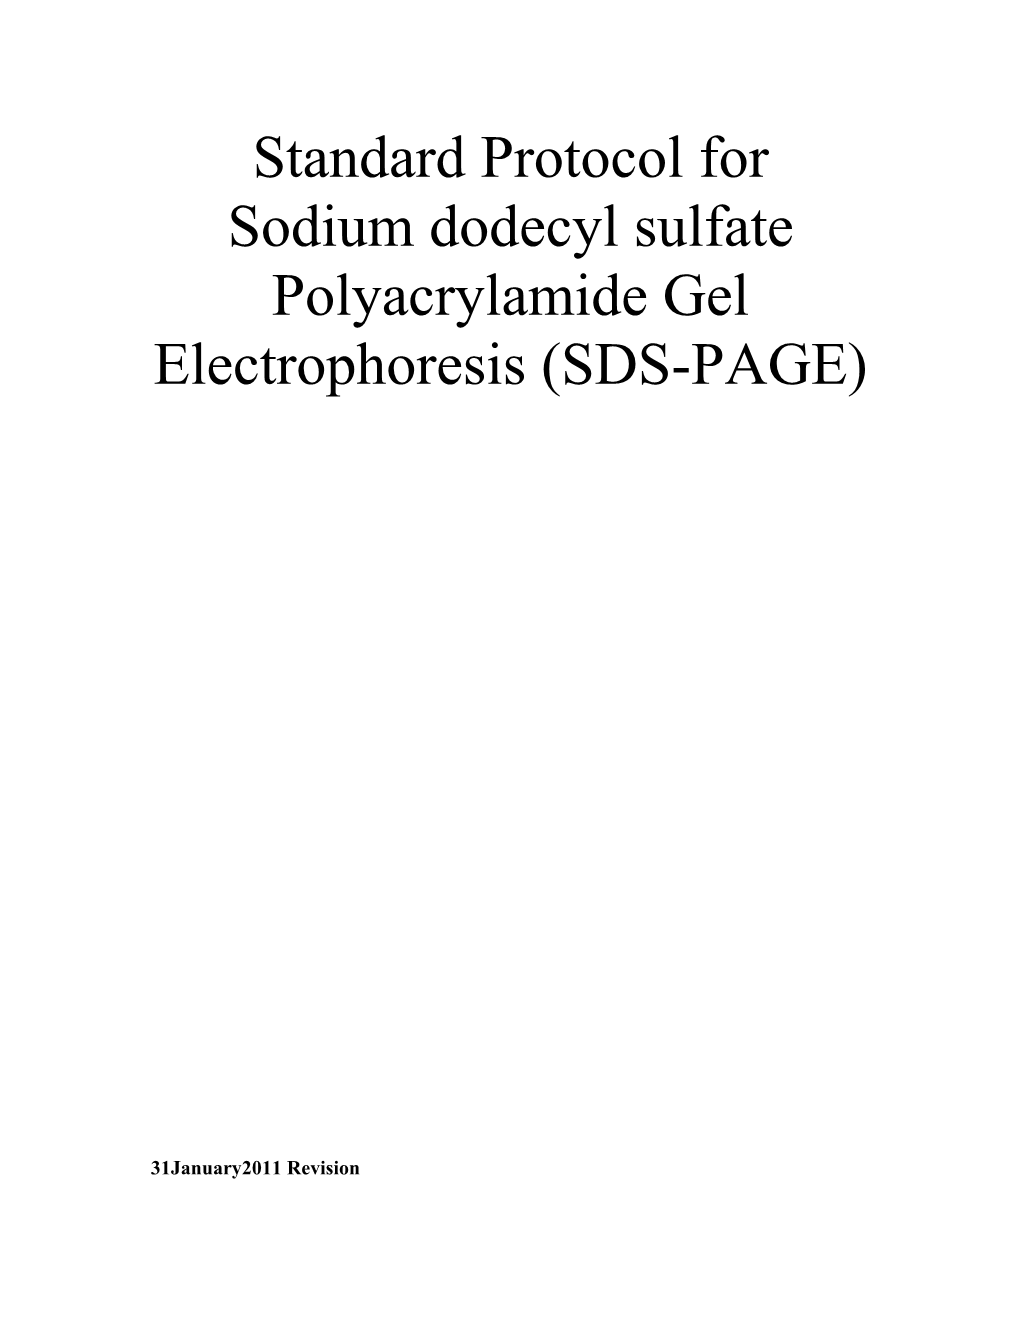 Sodium Dodecyl Sulfate Polyacrylamide Gel Electrophoresis (SDS-PAGE)